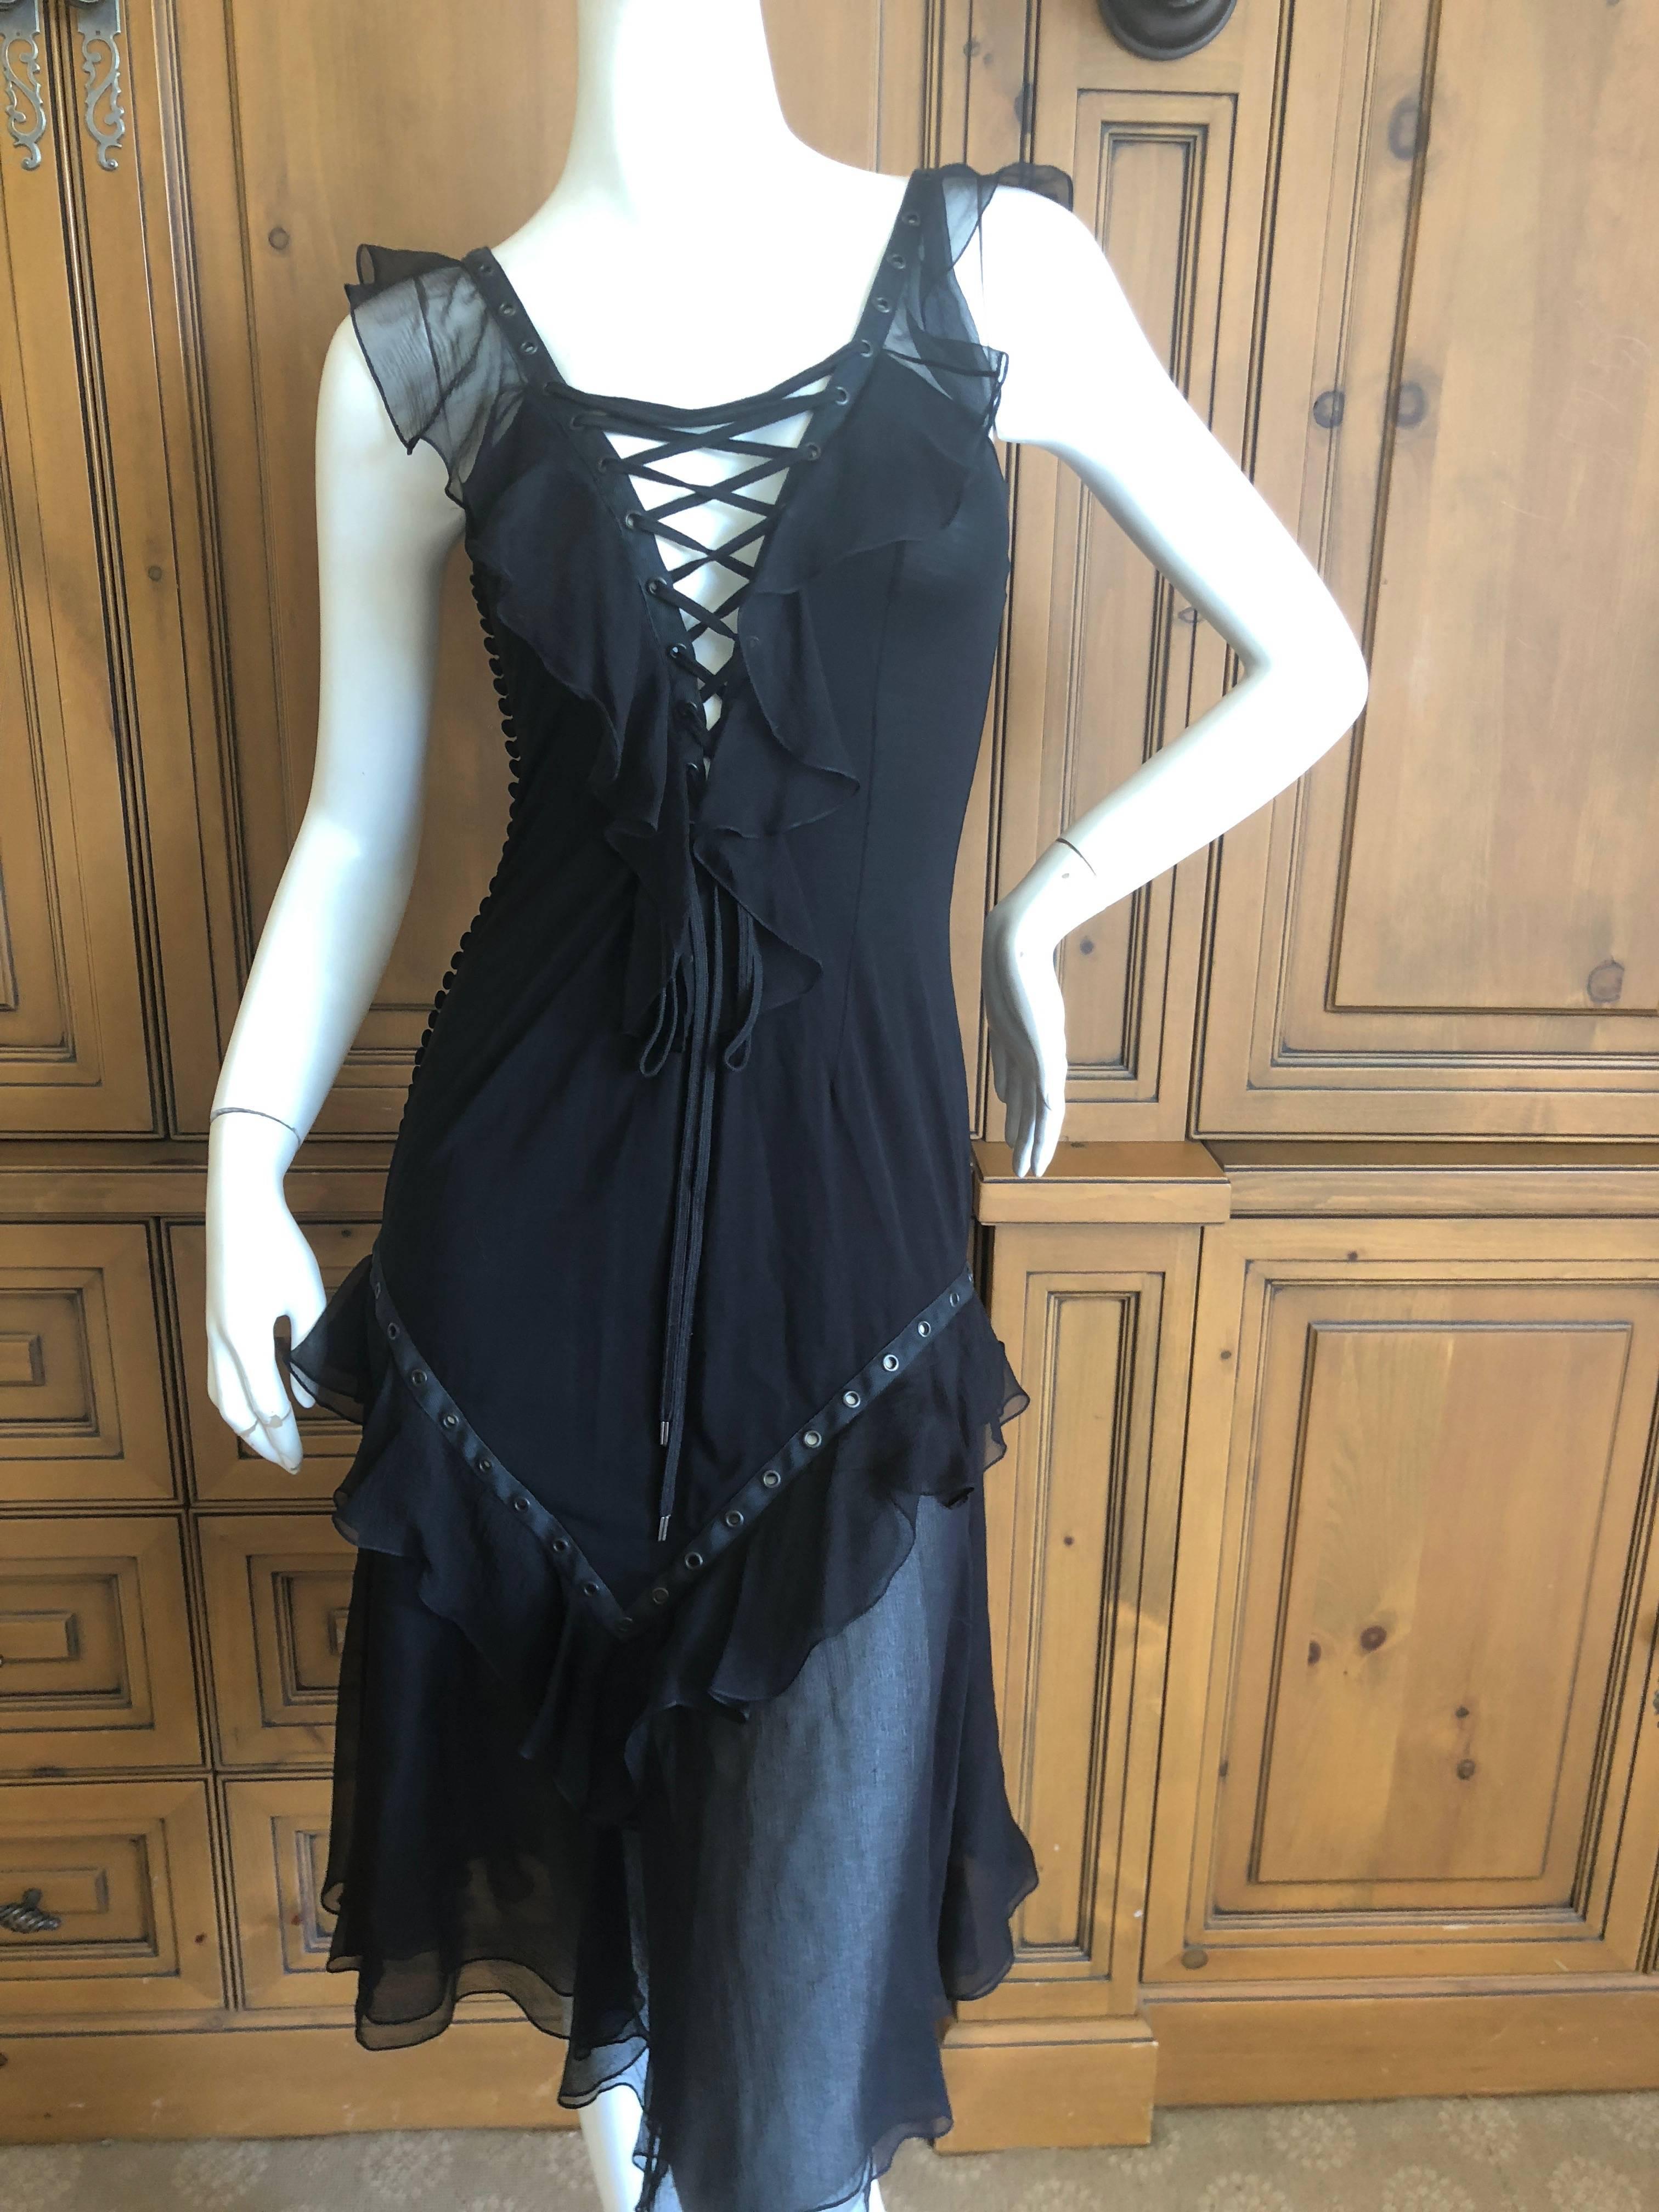 Christian Dior by John Galliano Black Silk Chiffon Corset Lace Ruffled Dress
Size 38
Bust 36